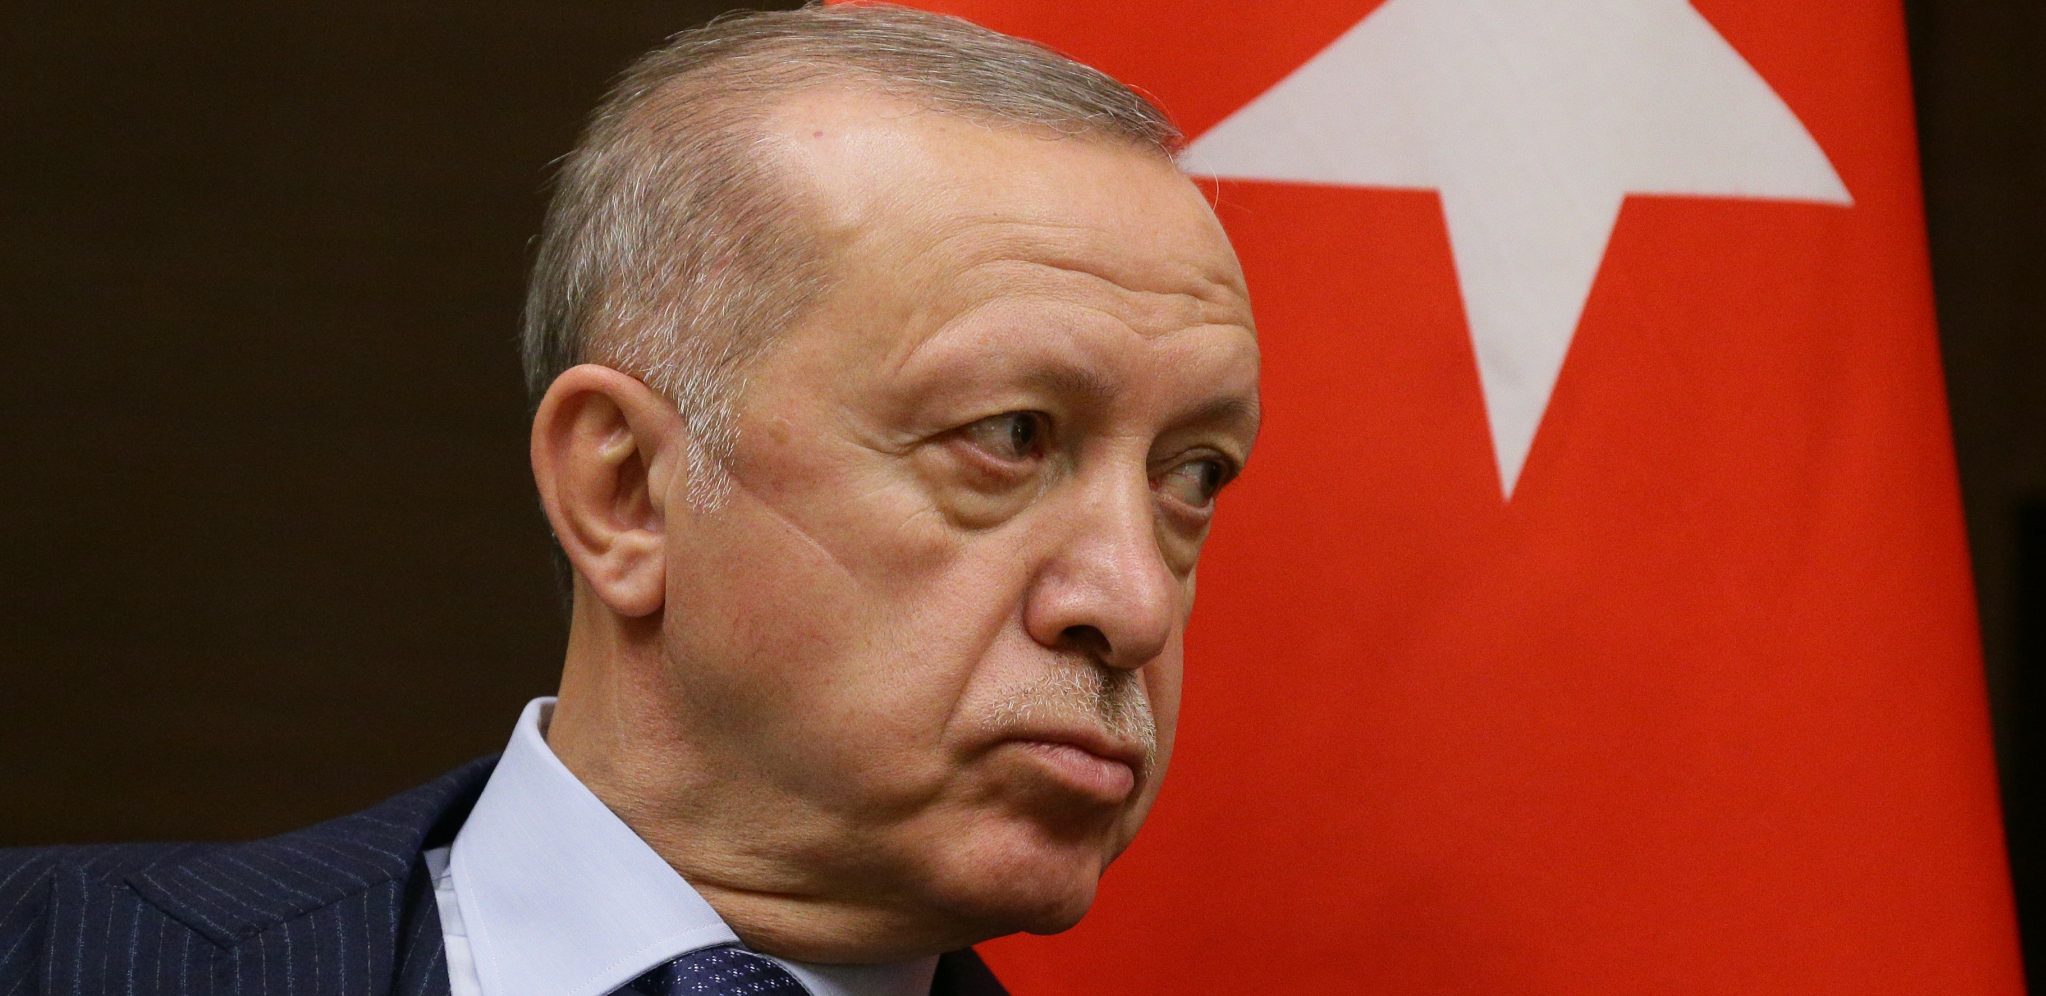 NIKO NE ŽELI DA SVET DOŽIVI NOVI ČERNOBILJ Erdogan zabrinut, Rusija treba odmah da povuče svoju vojsku